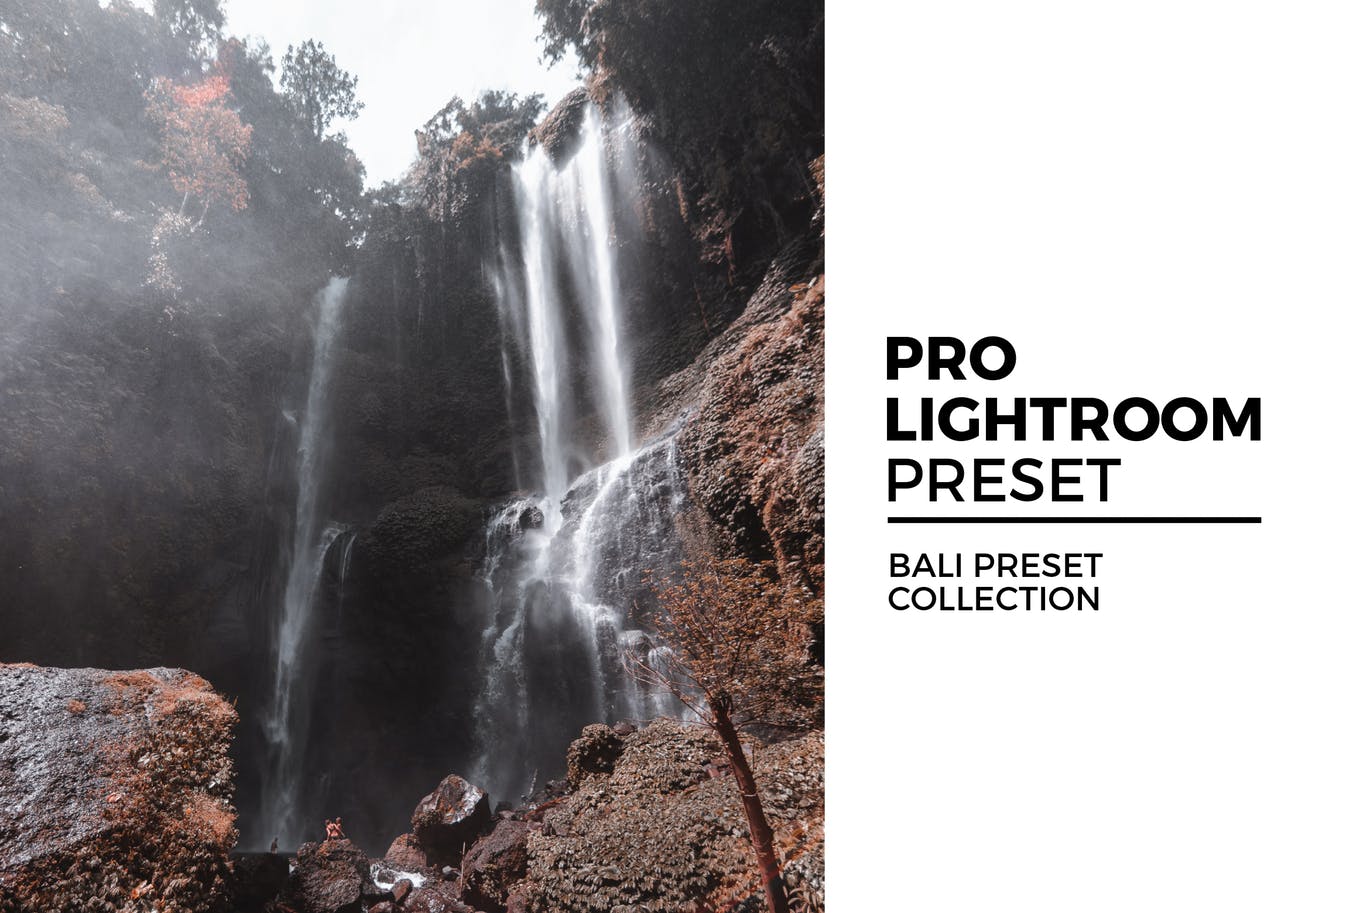 巴厘岛预设集合Bali Preset Collection Lightroom预设插图